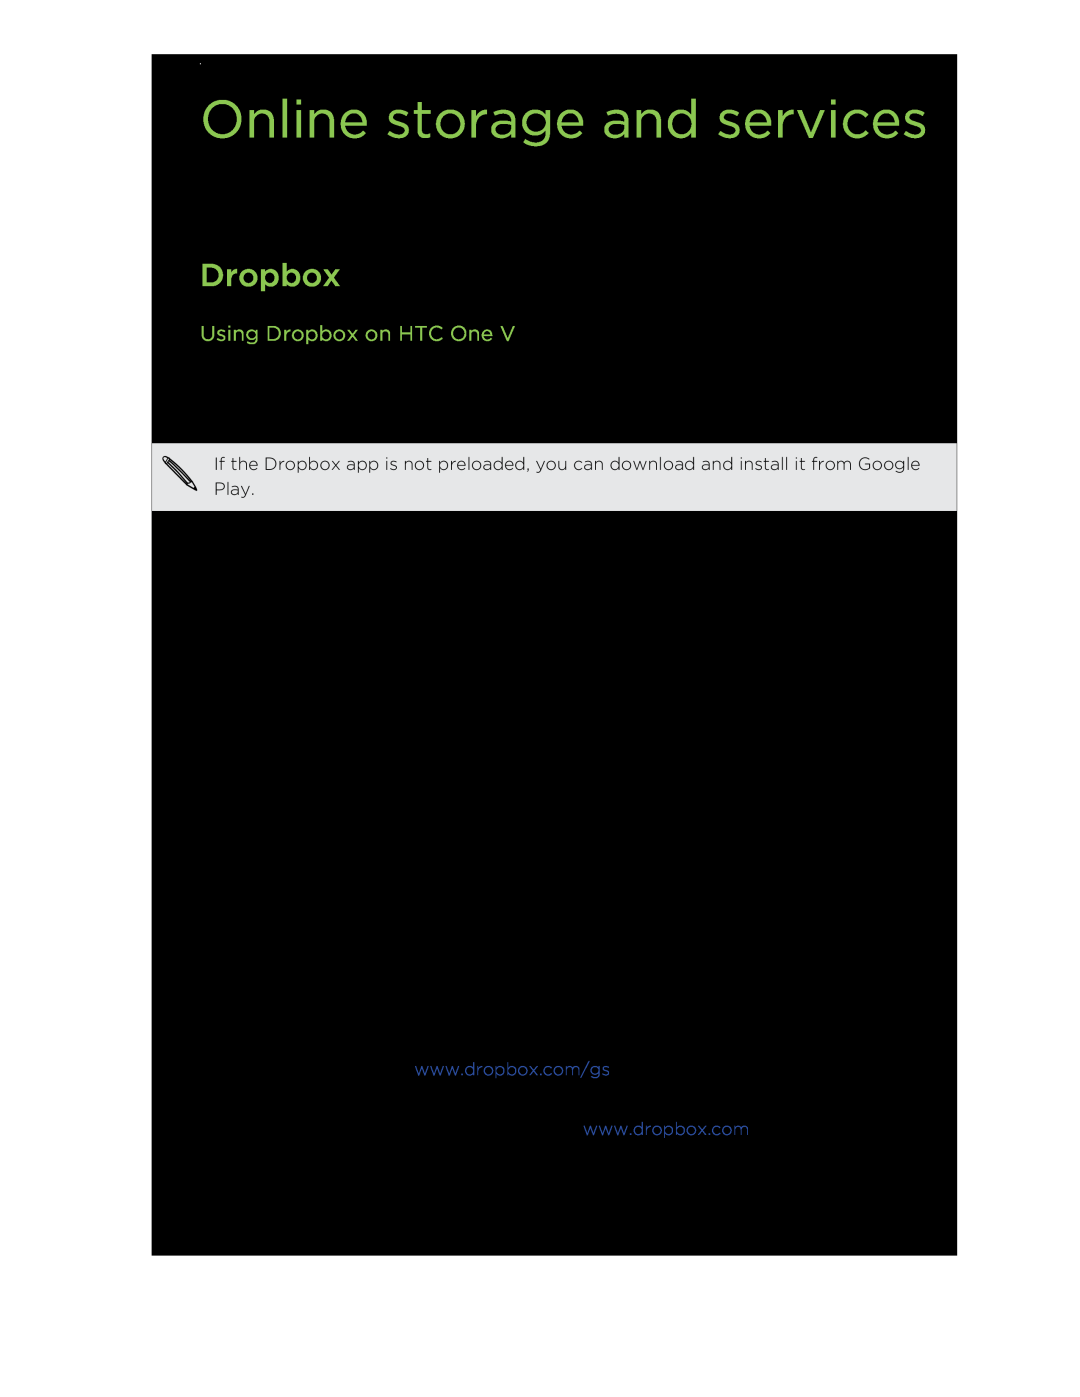 HTC C3HTCONEV4GBUNLOCKEDBLACK manual Online storage and services, Using Dropbox on HTC One 